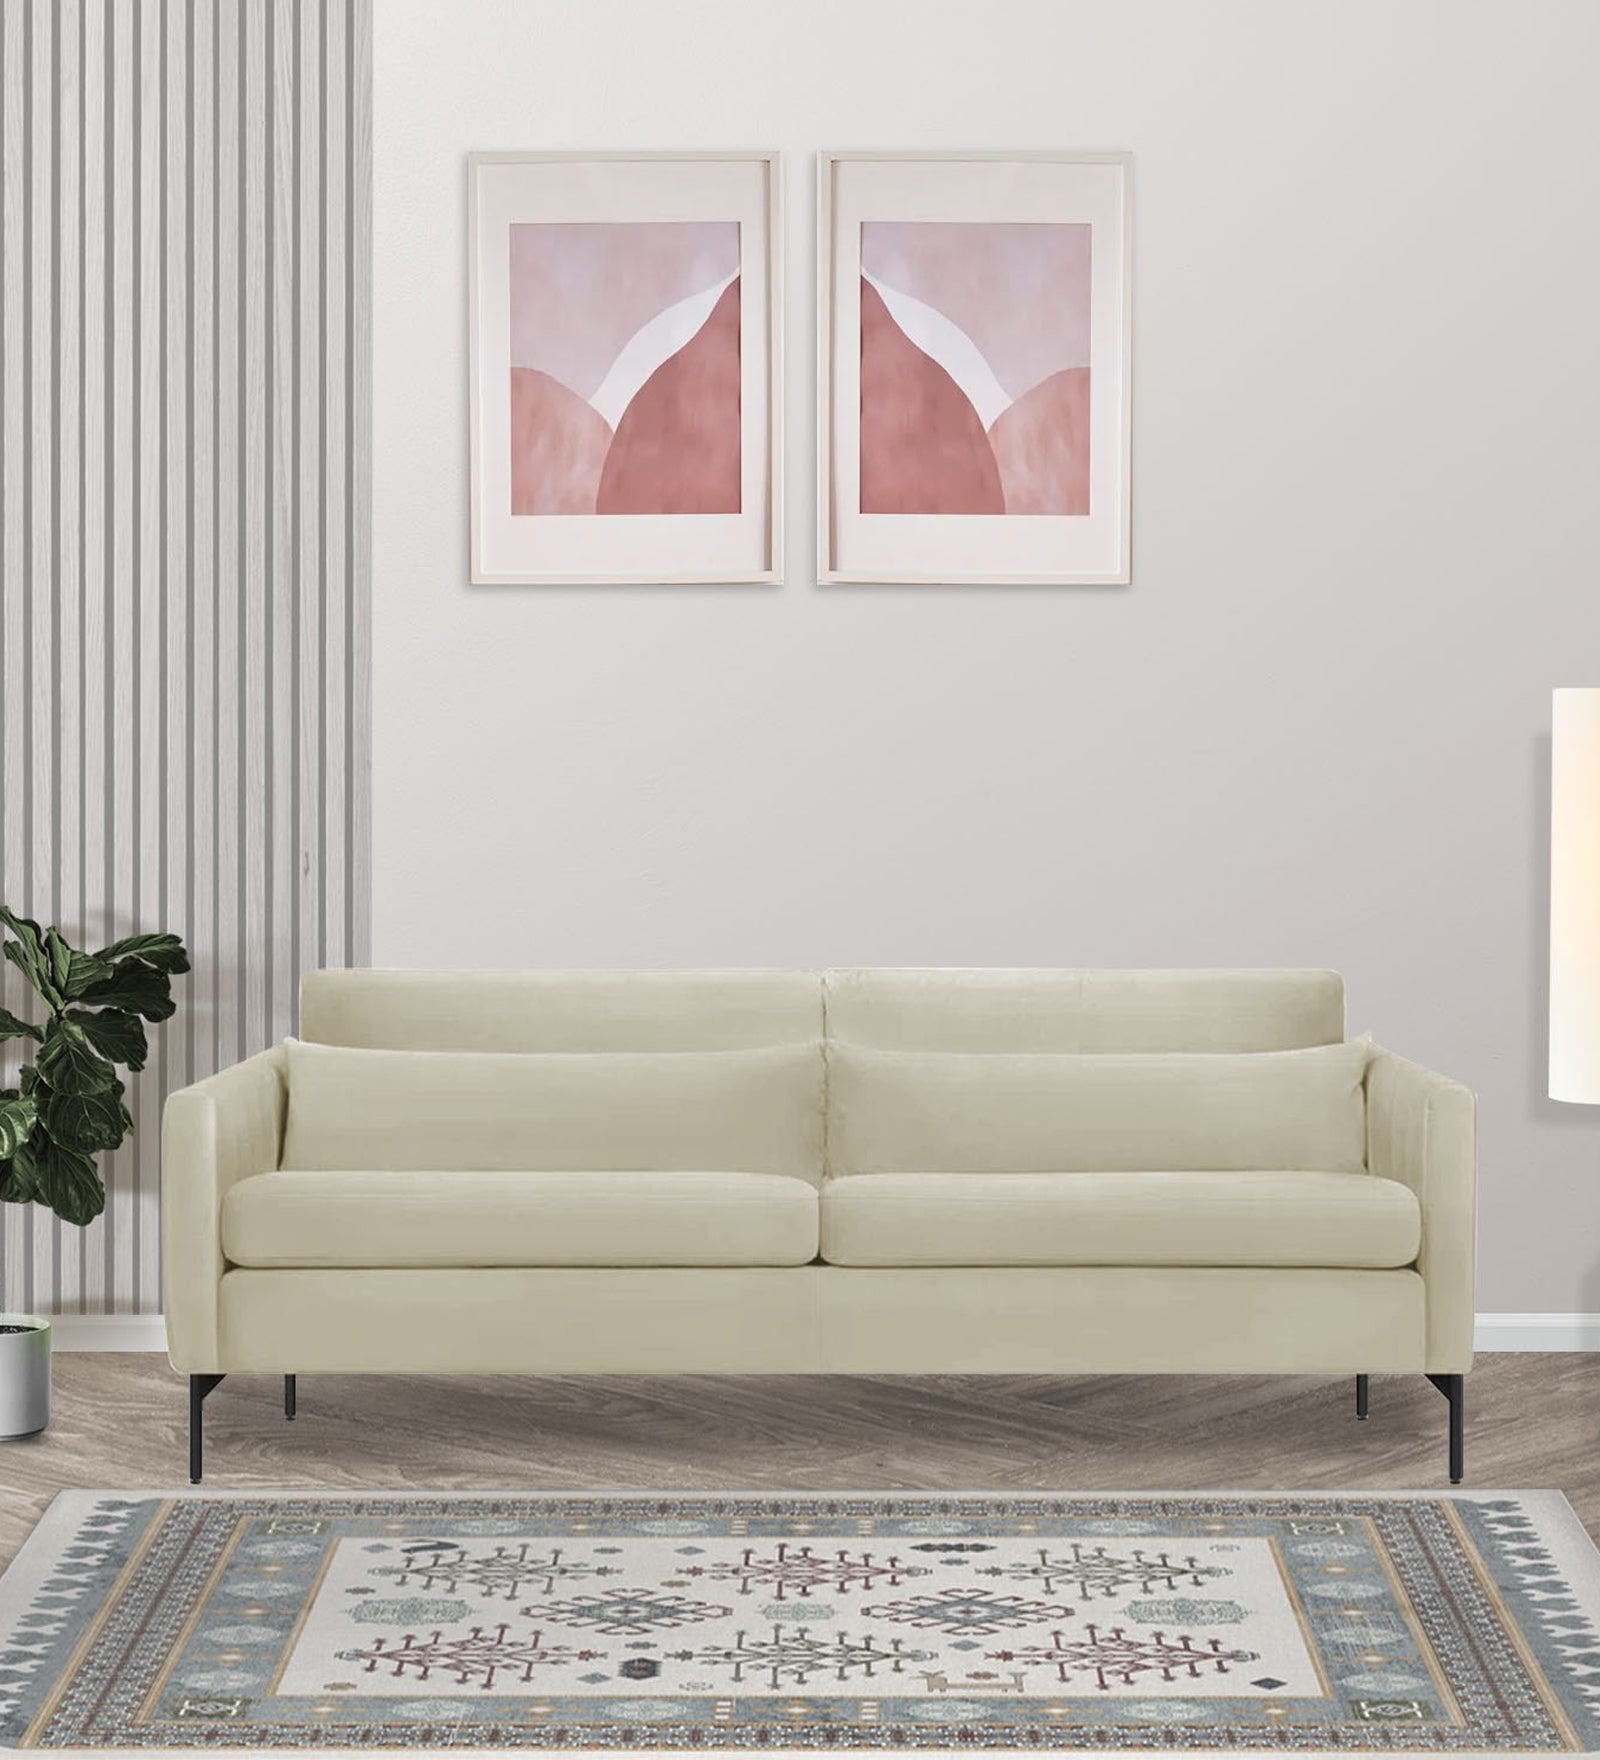 Haru Velvet 3 Seater Sofa in Warm White Colour